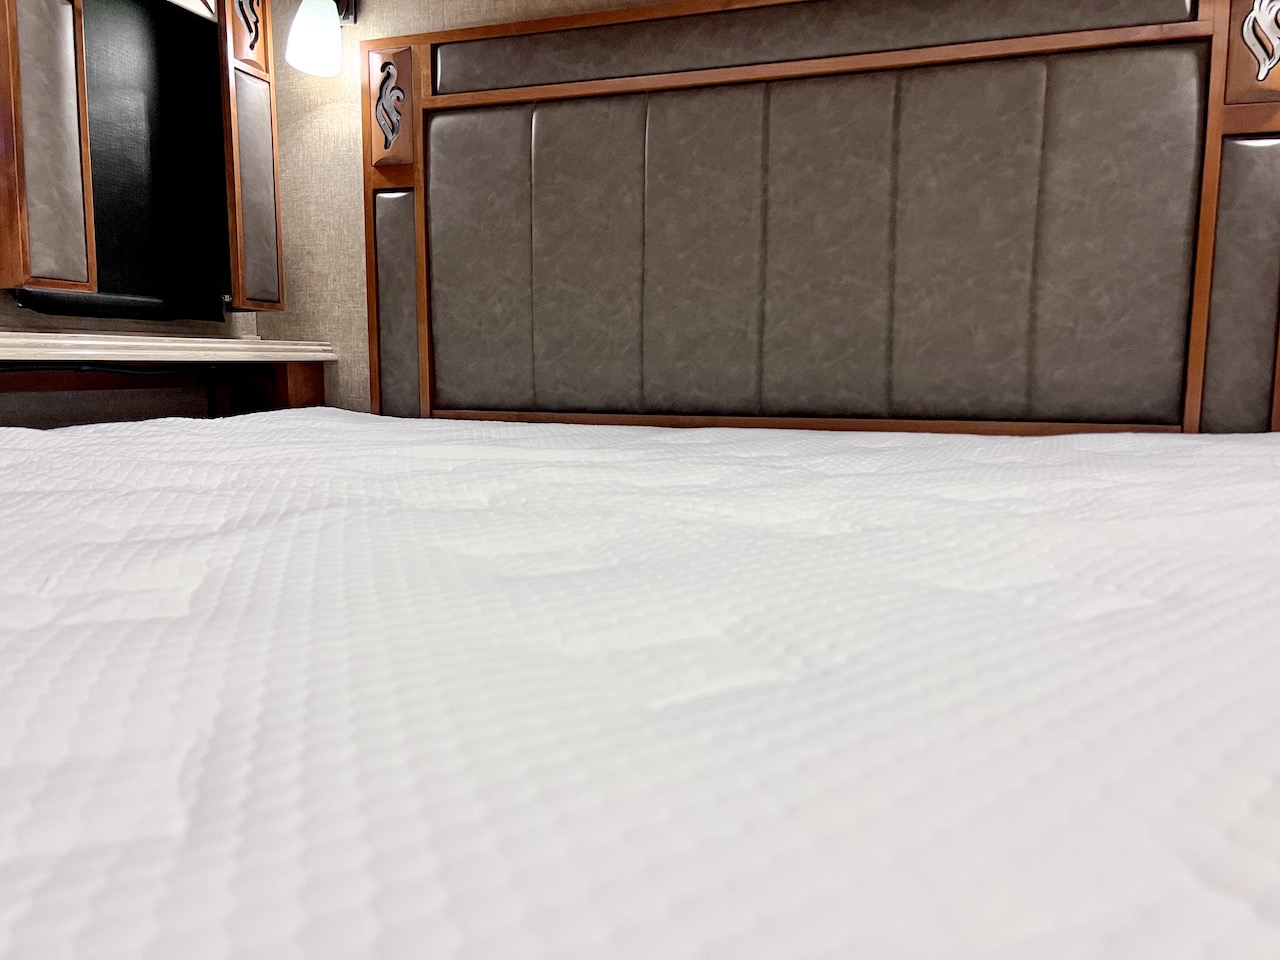 ghostbed rv mattress reviews